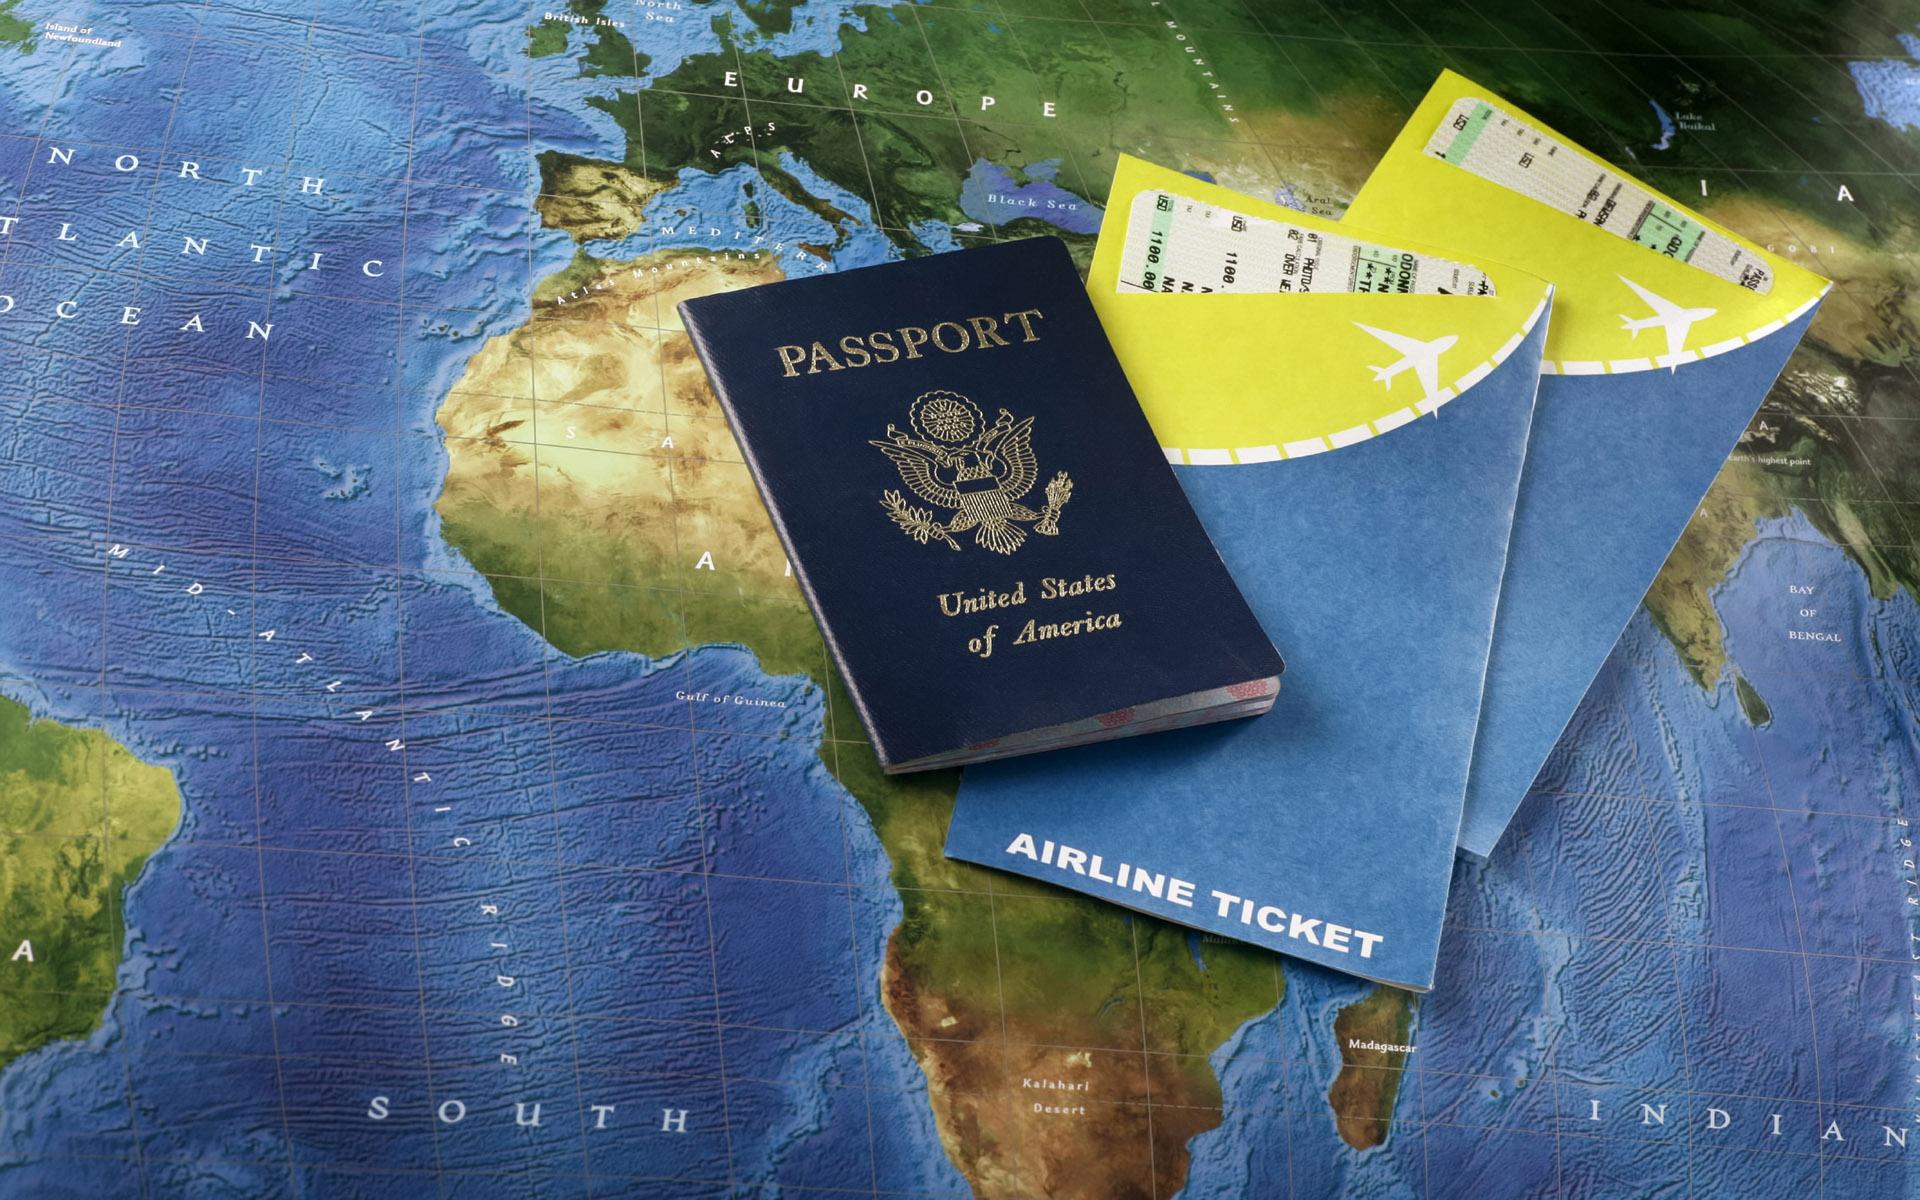 Passport Visa plane ticket wallpapers and image